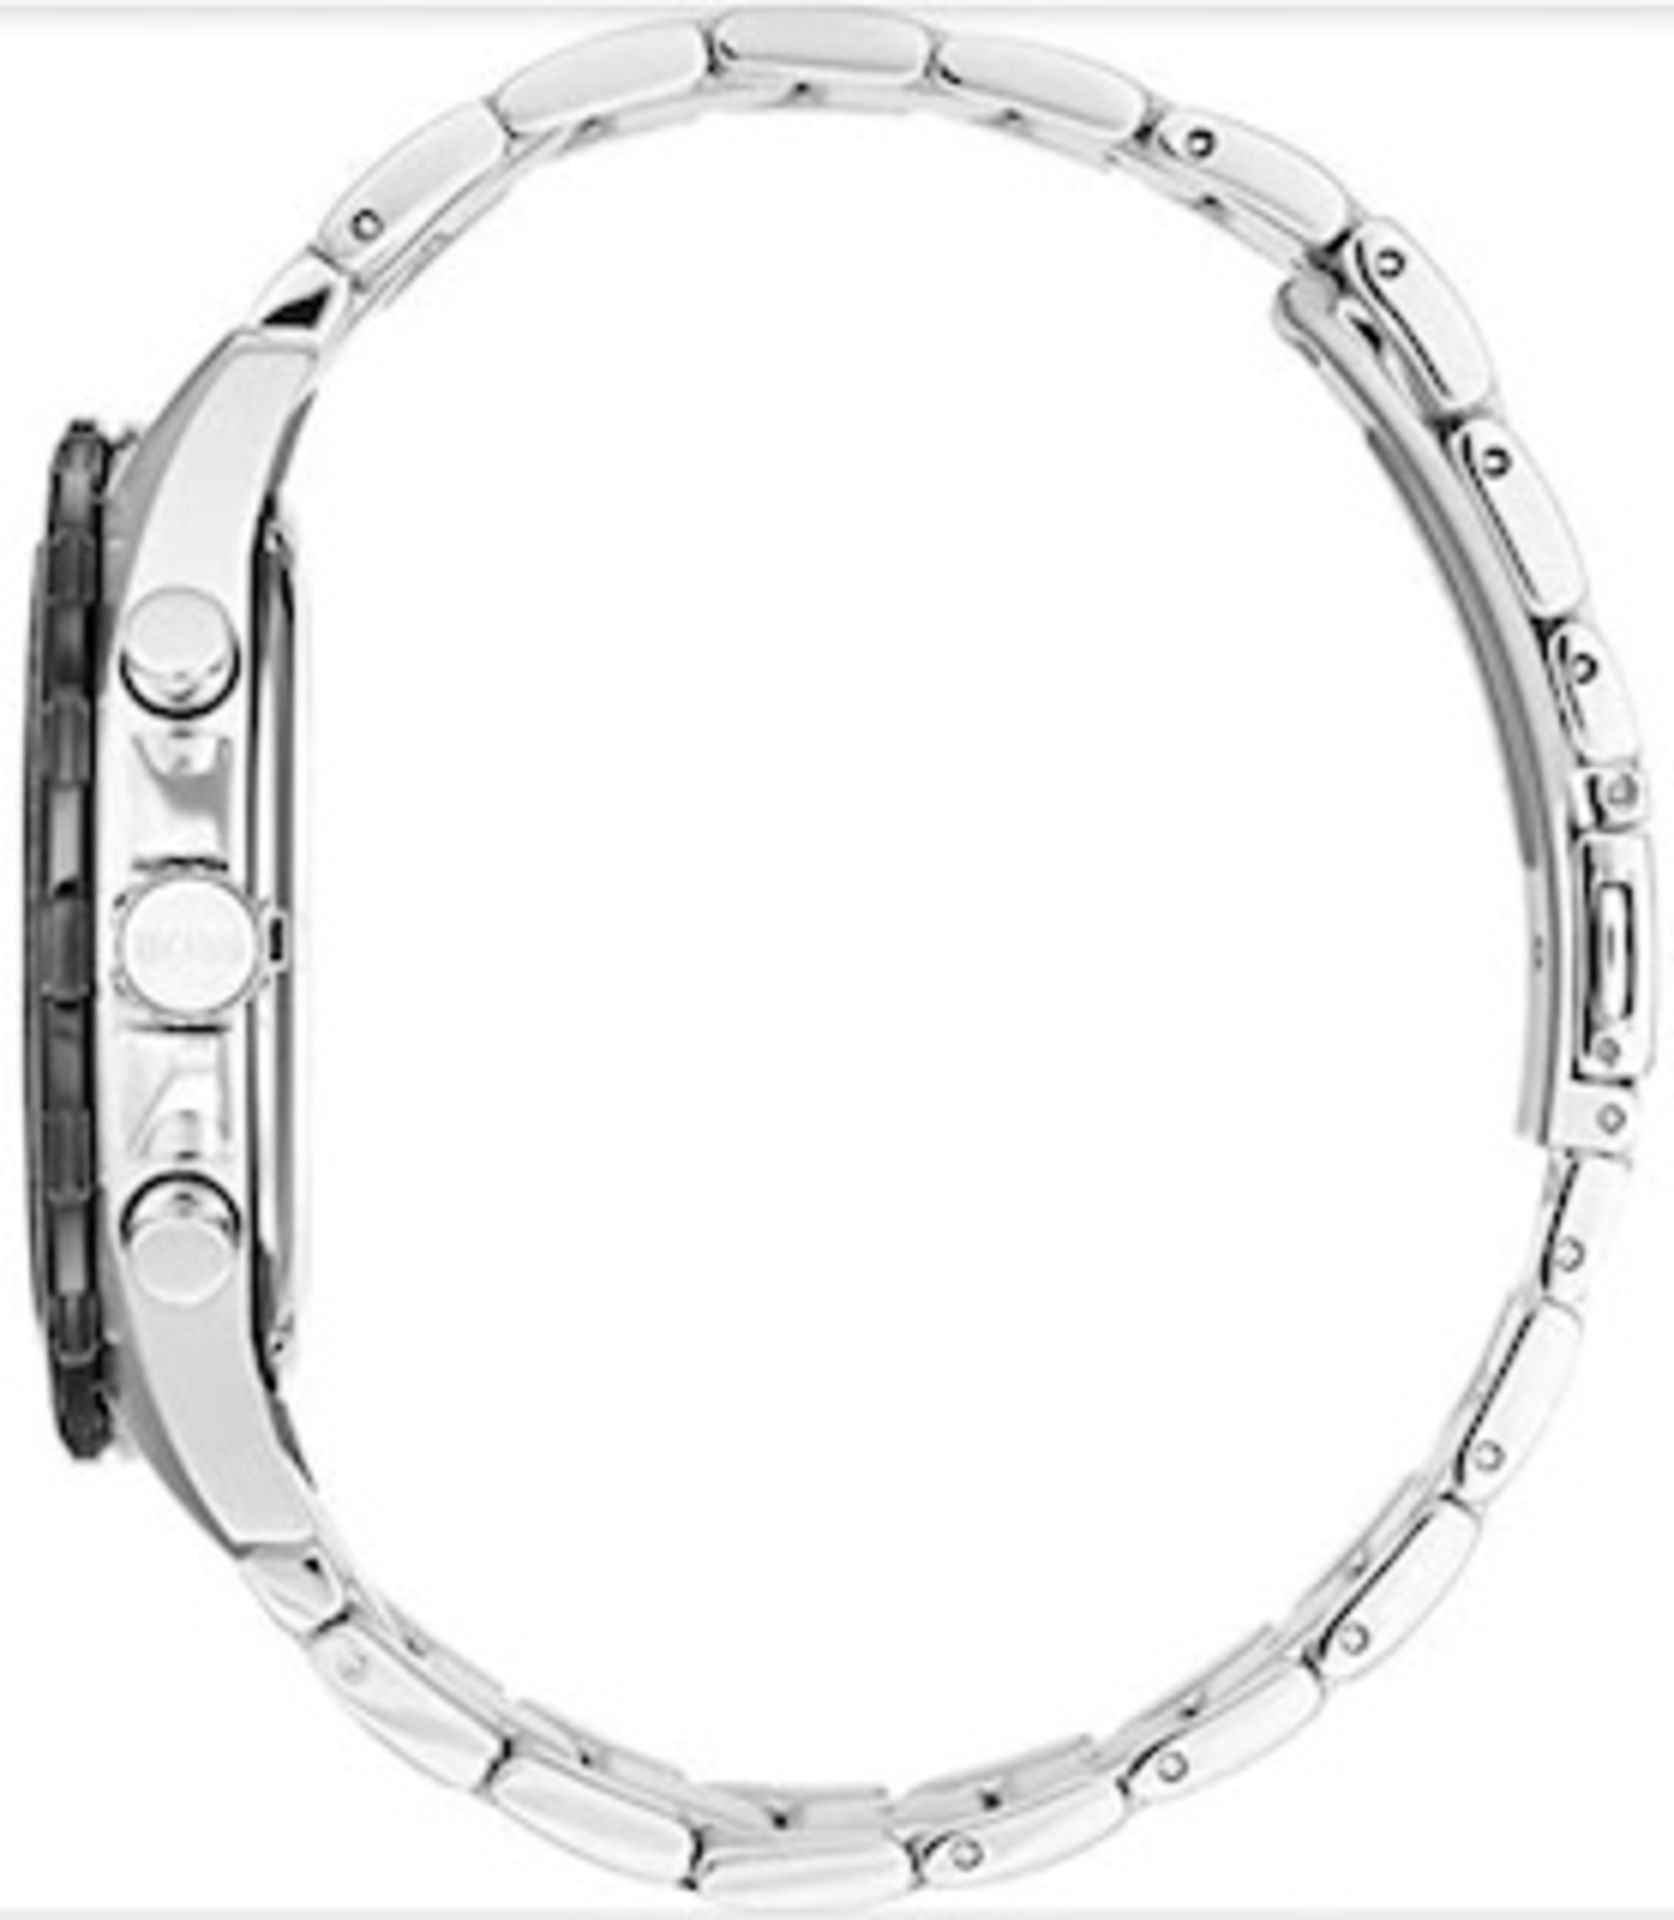 Hugo Boss 1513682 Men's Intensity Green Dial Silver Bracelet Chronograph Watch - Image 5 of 6